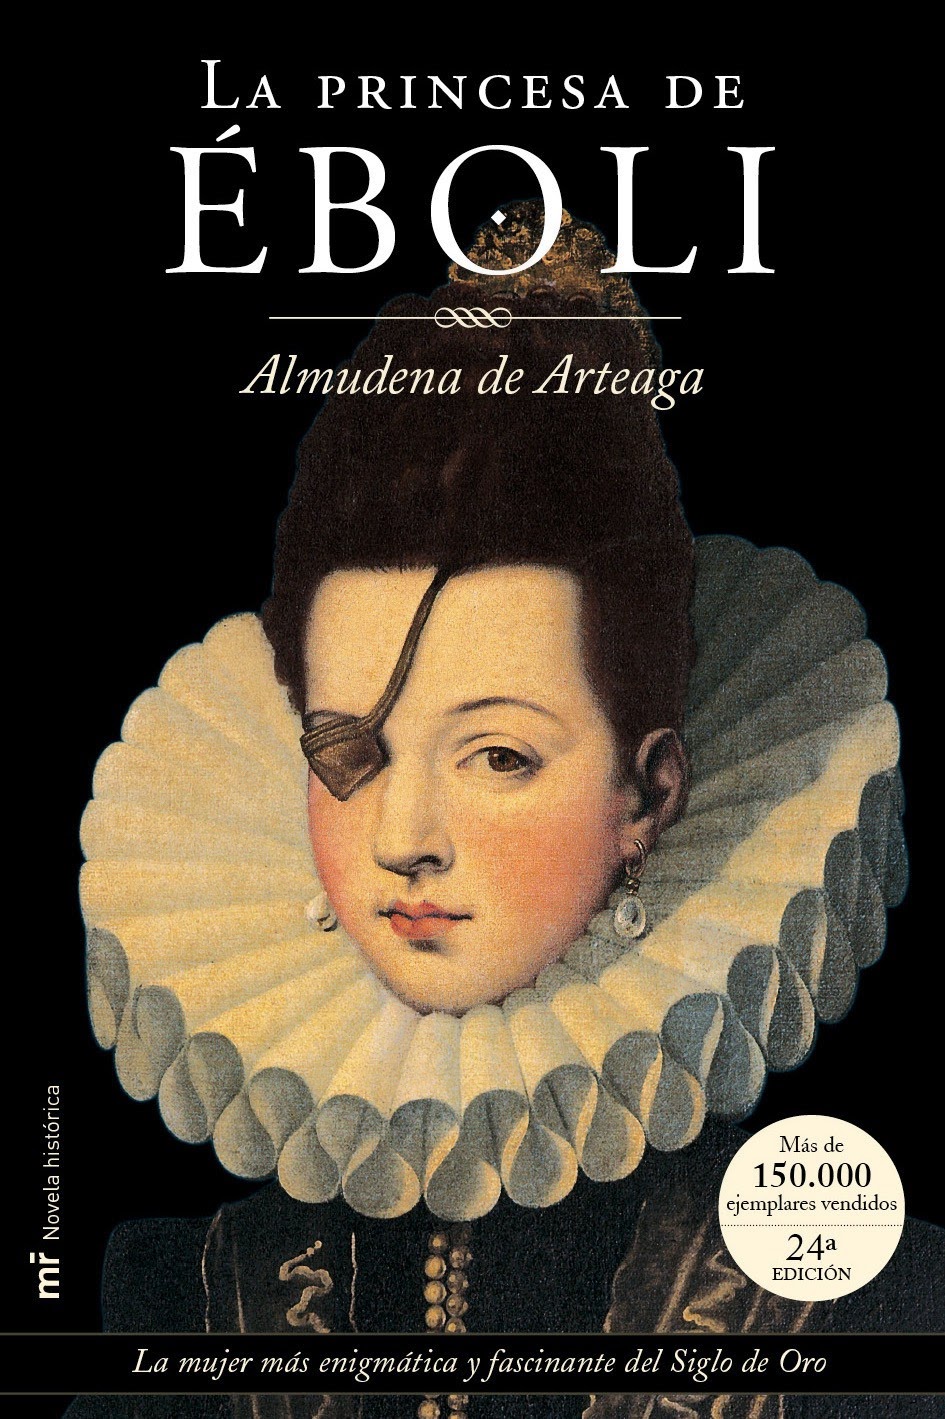 La princesa de Éboli - Almudena de Arteaga (1998)